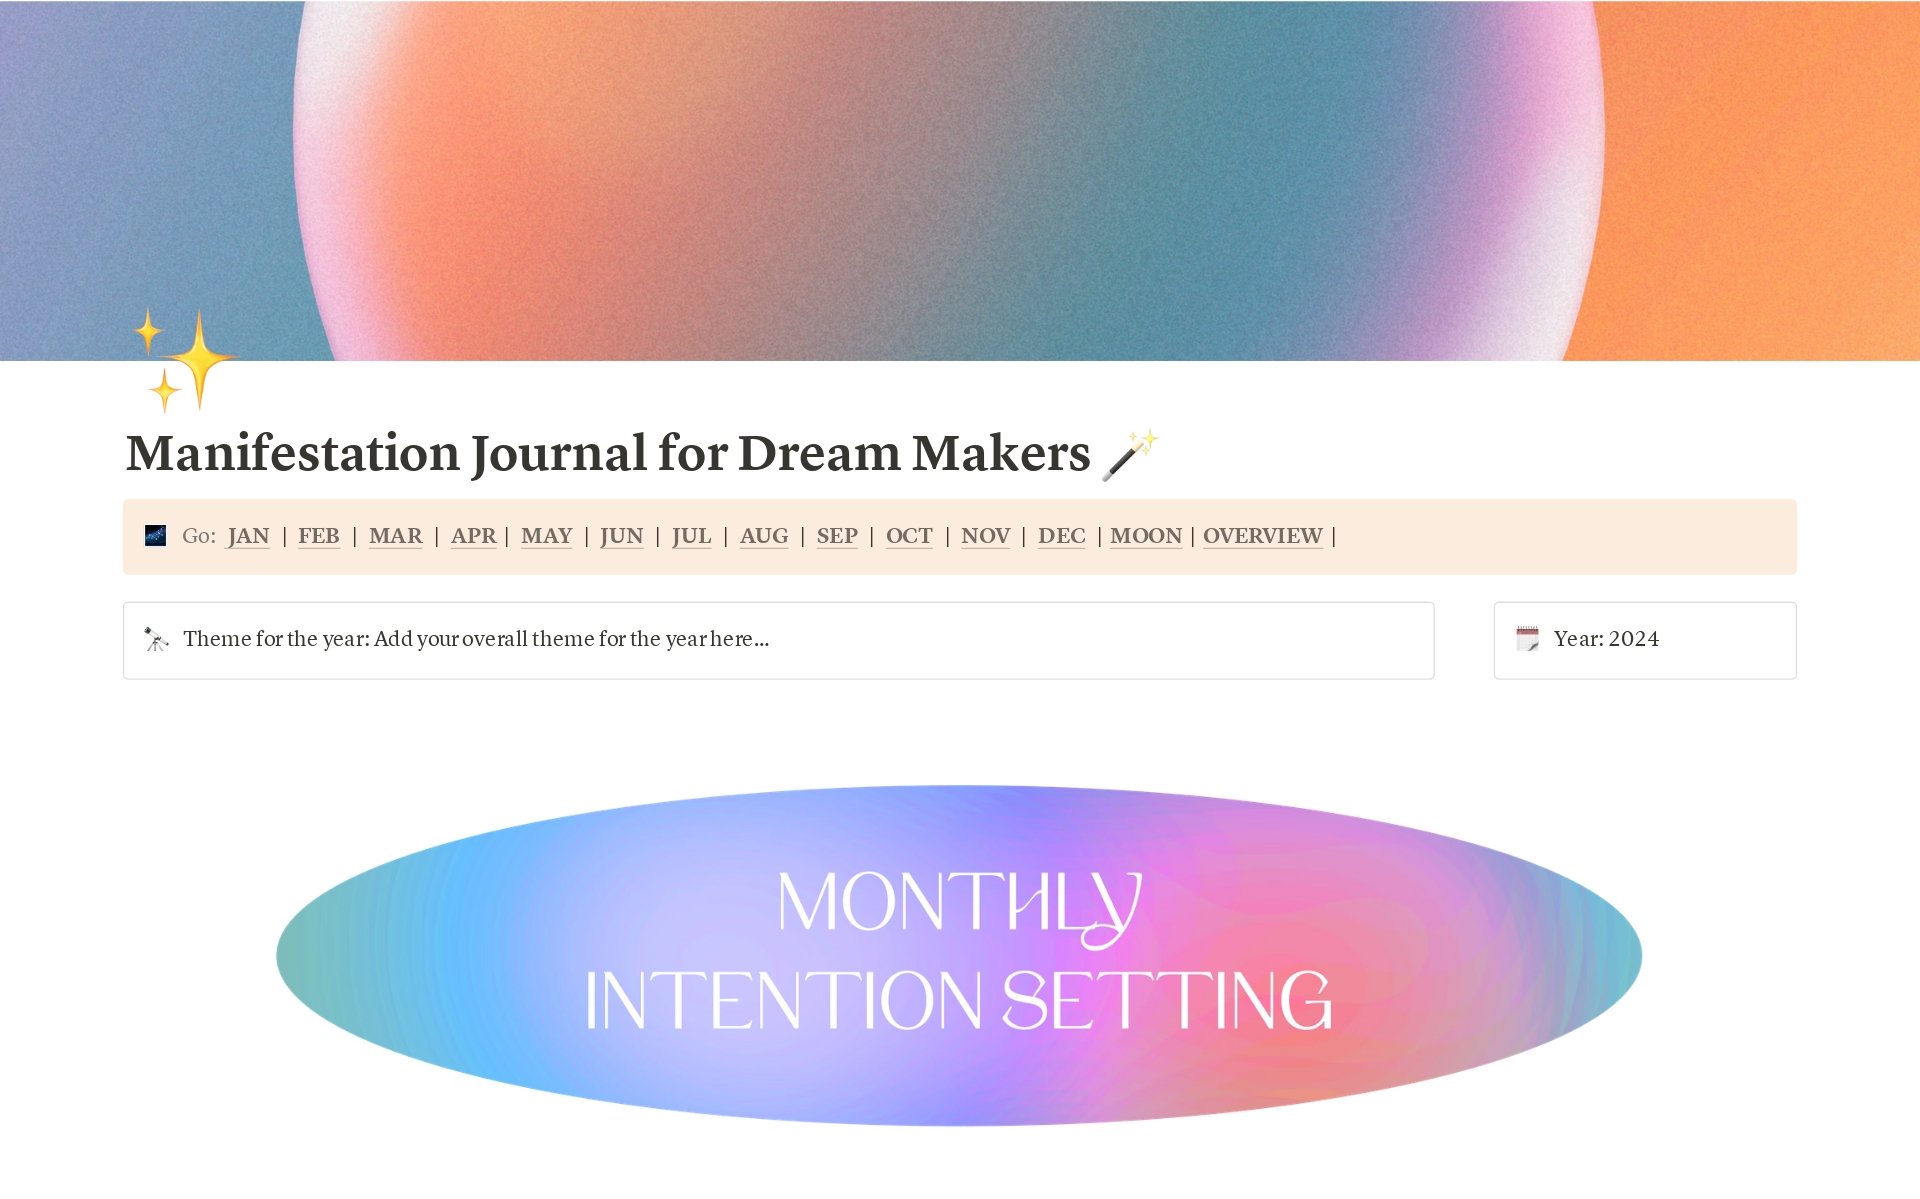 Vista previa de una plantilla para Manifestation Journal for Dream Makers